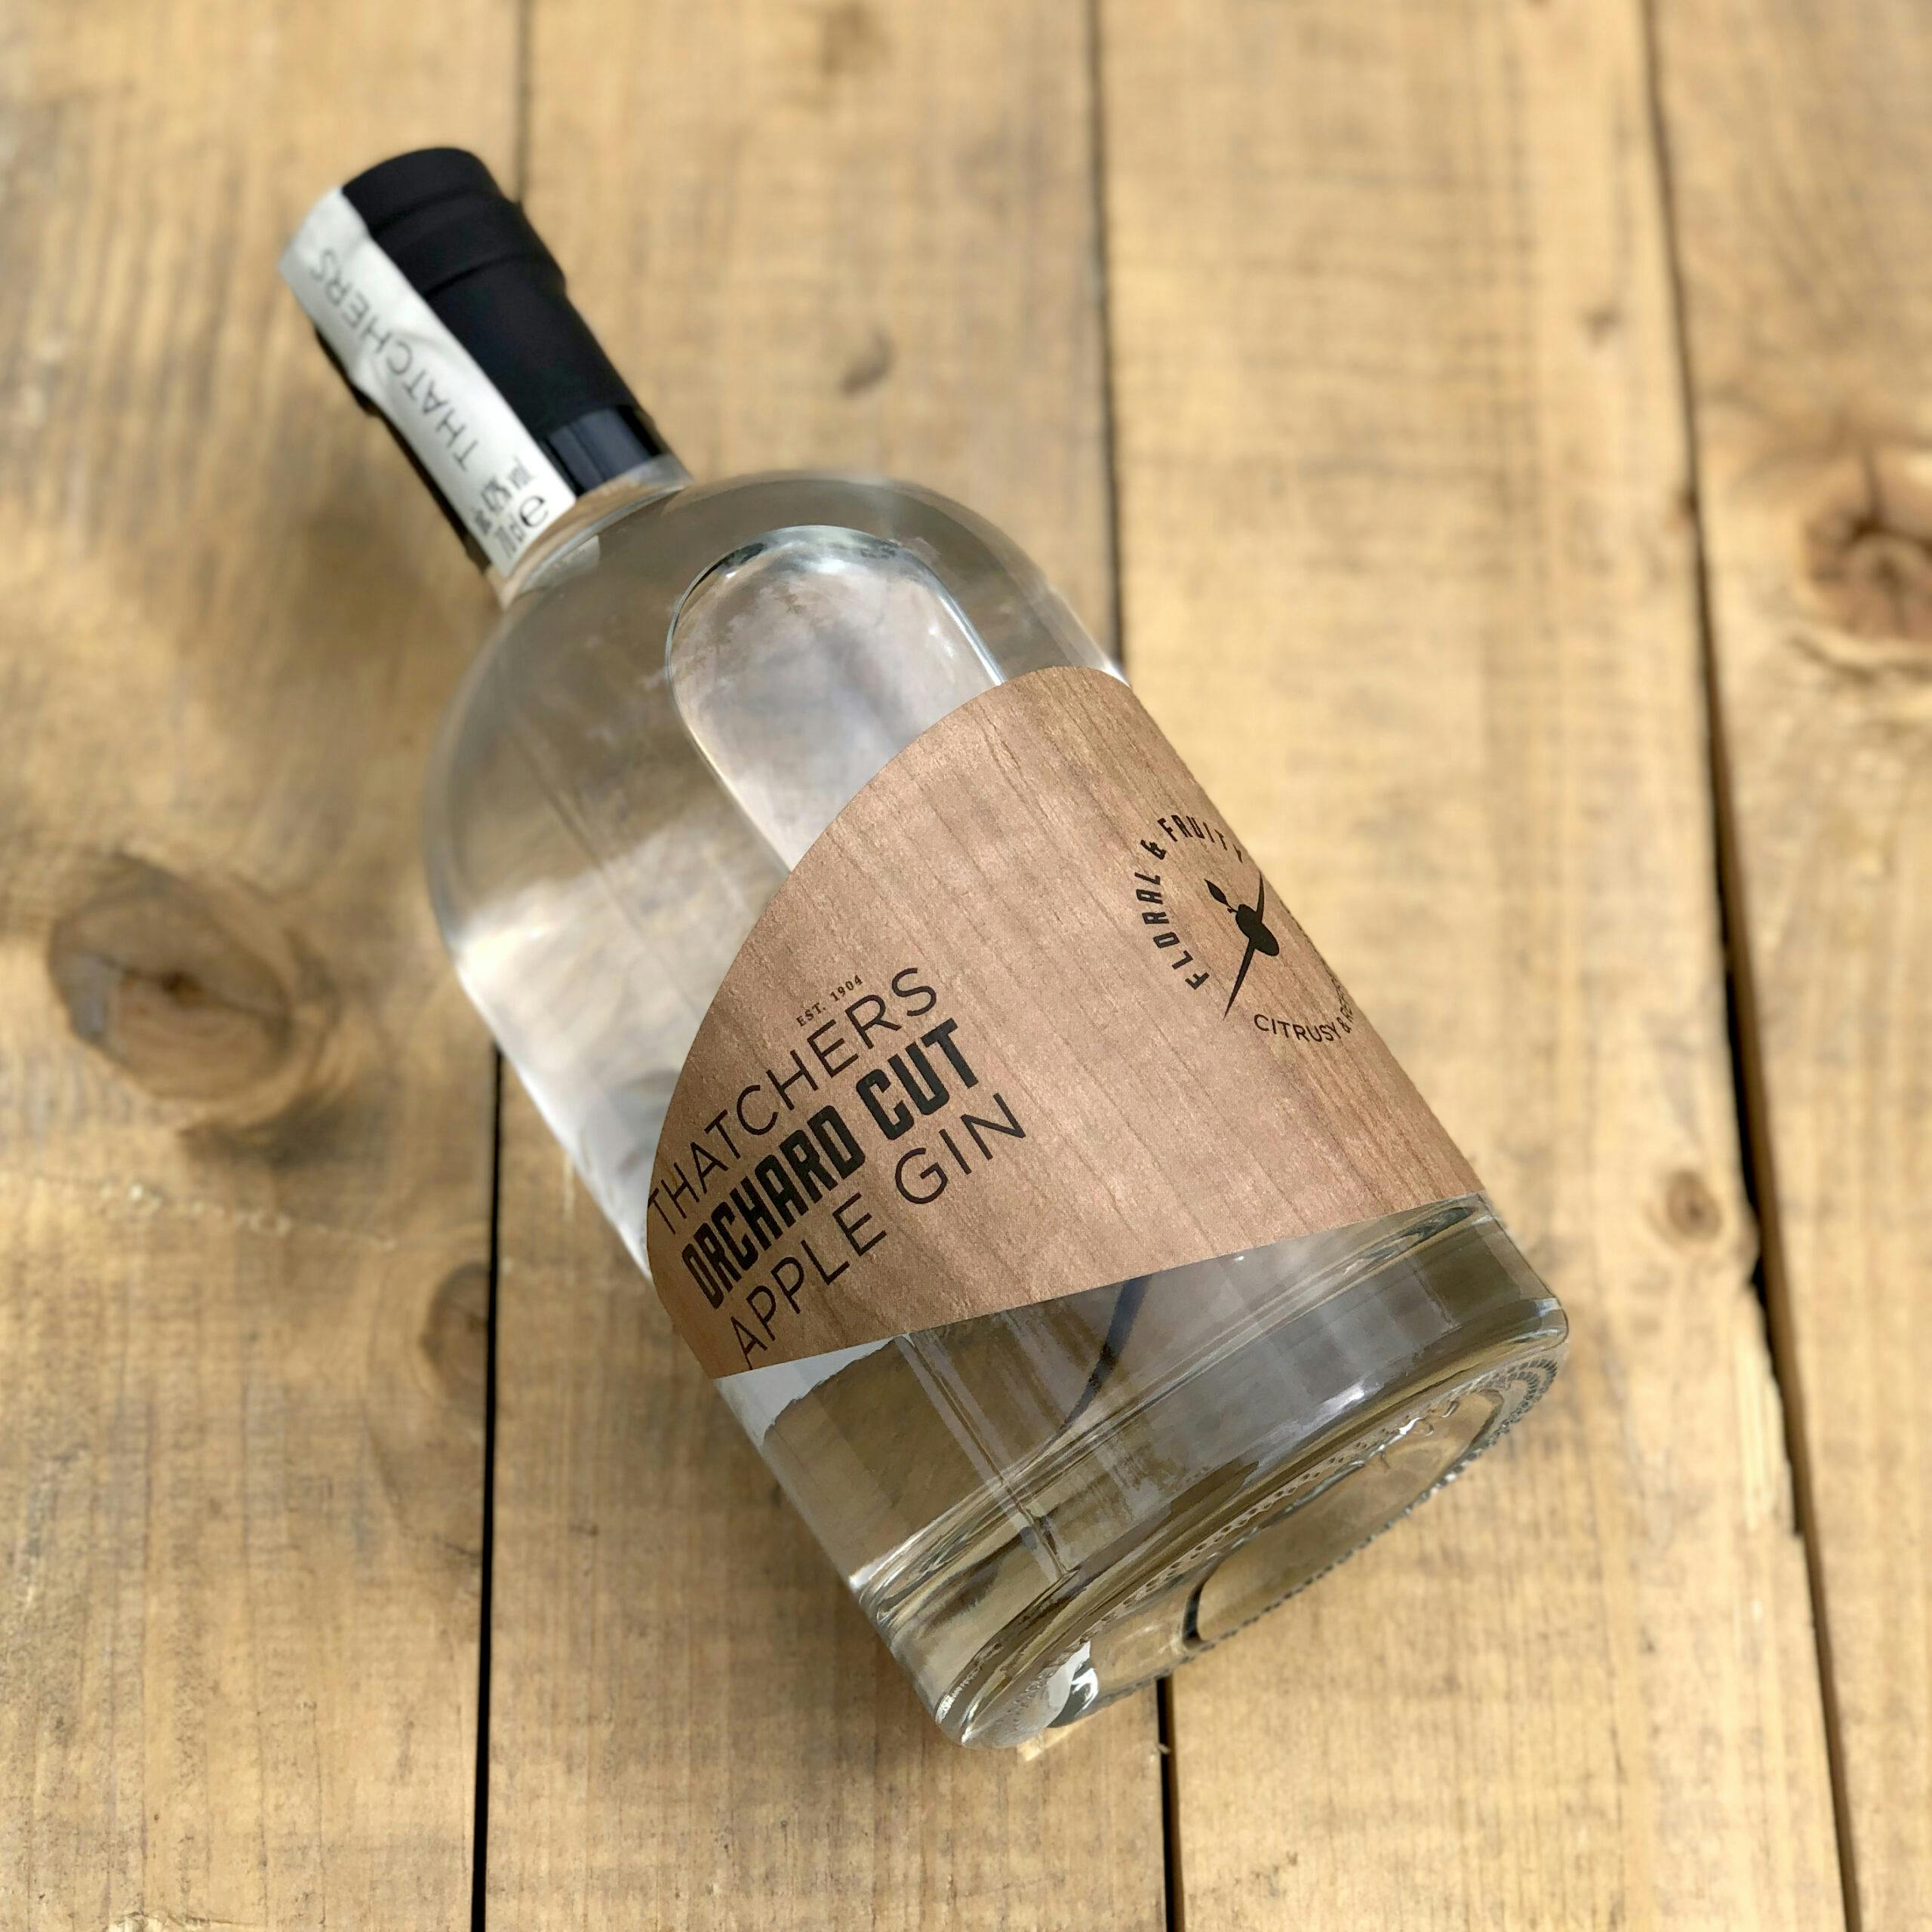 Image of Thatchers Apple Gin: Una bella etichetta wood – label look